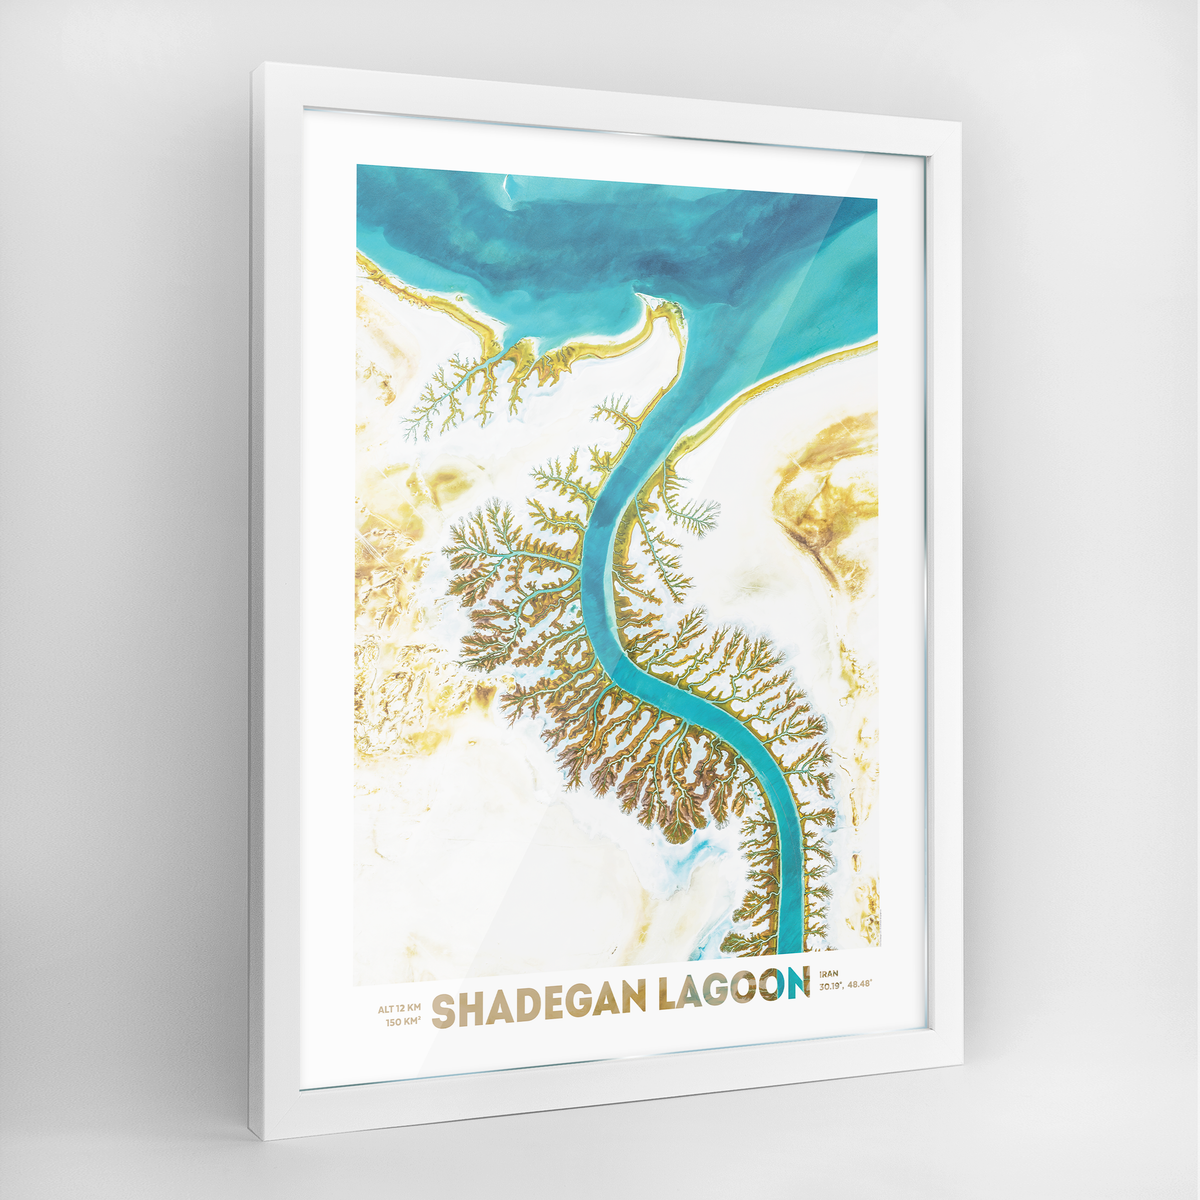 Shadegan Lagoon